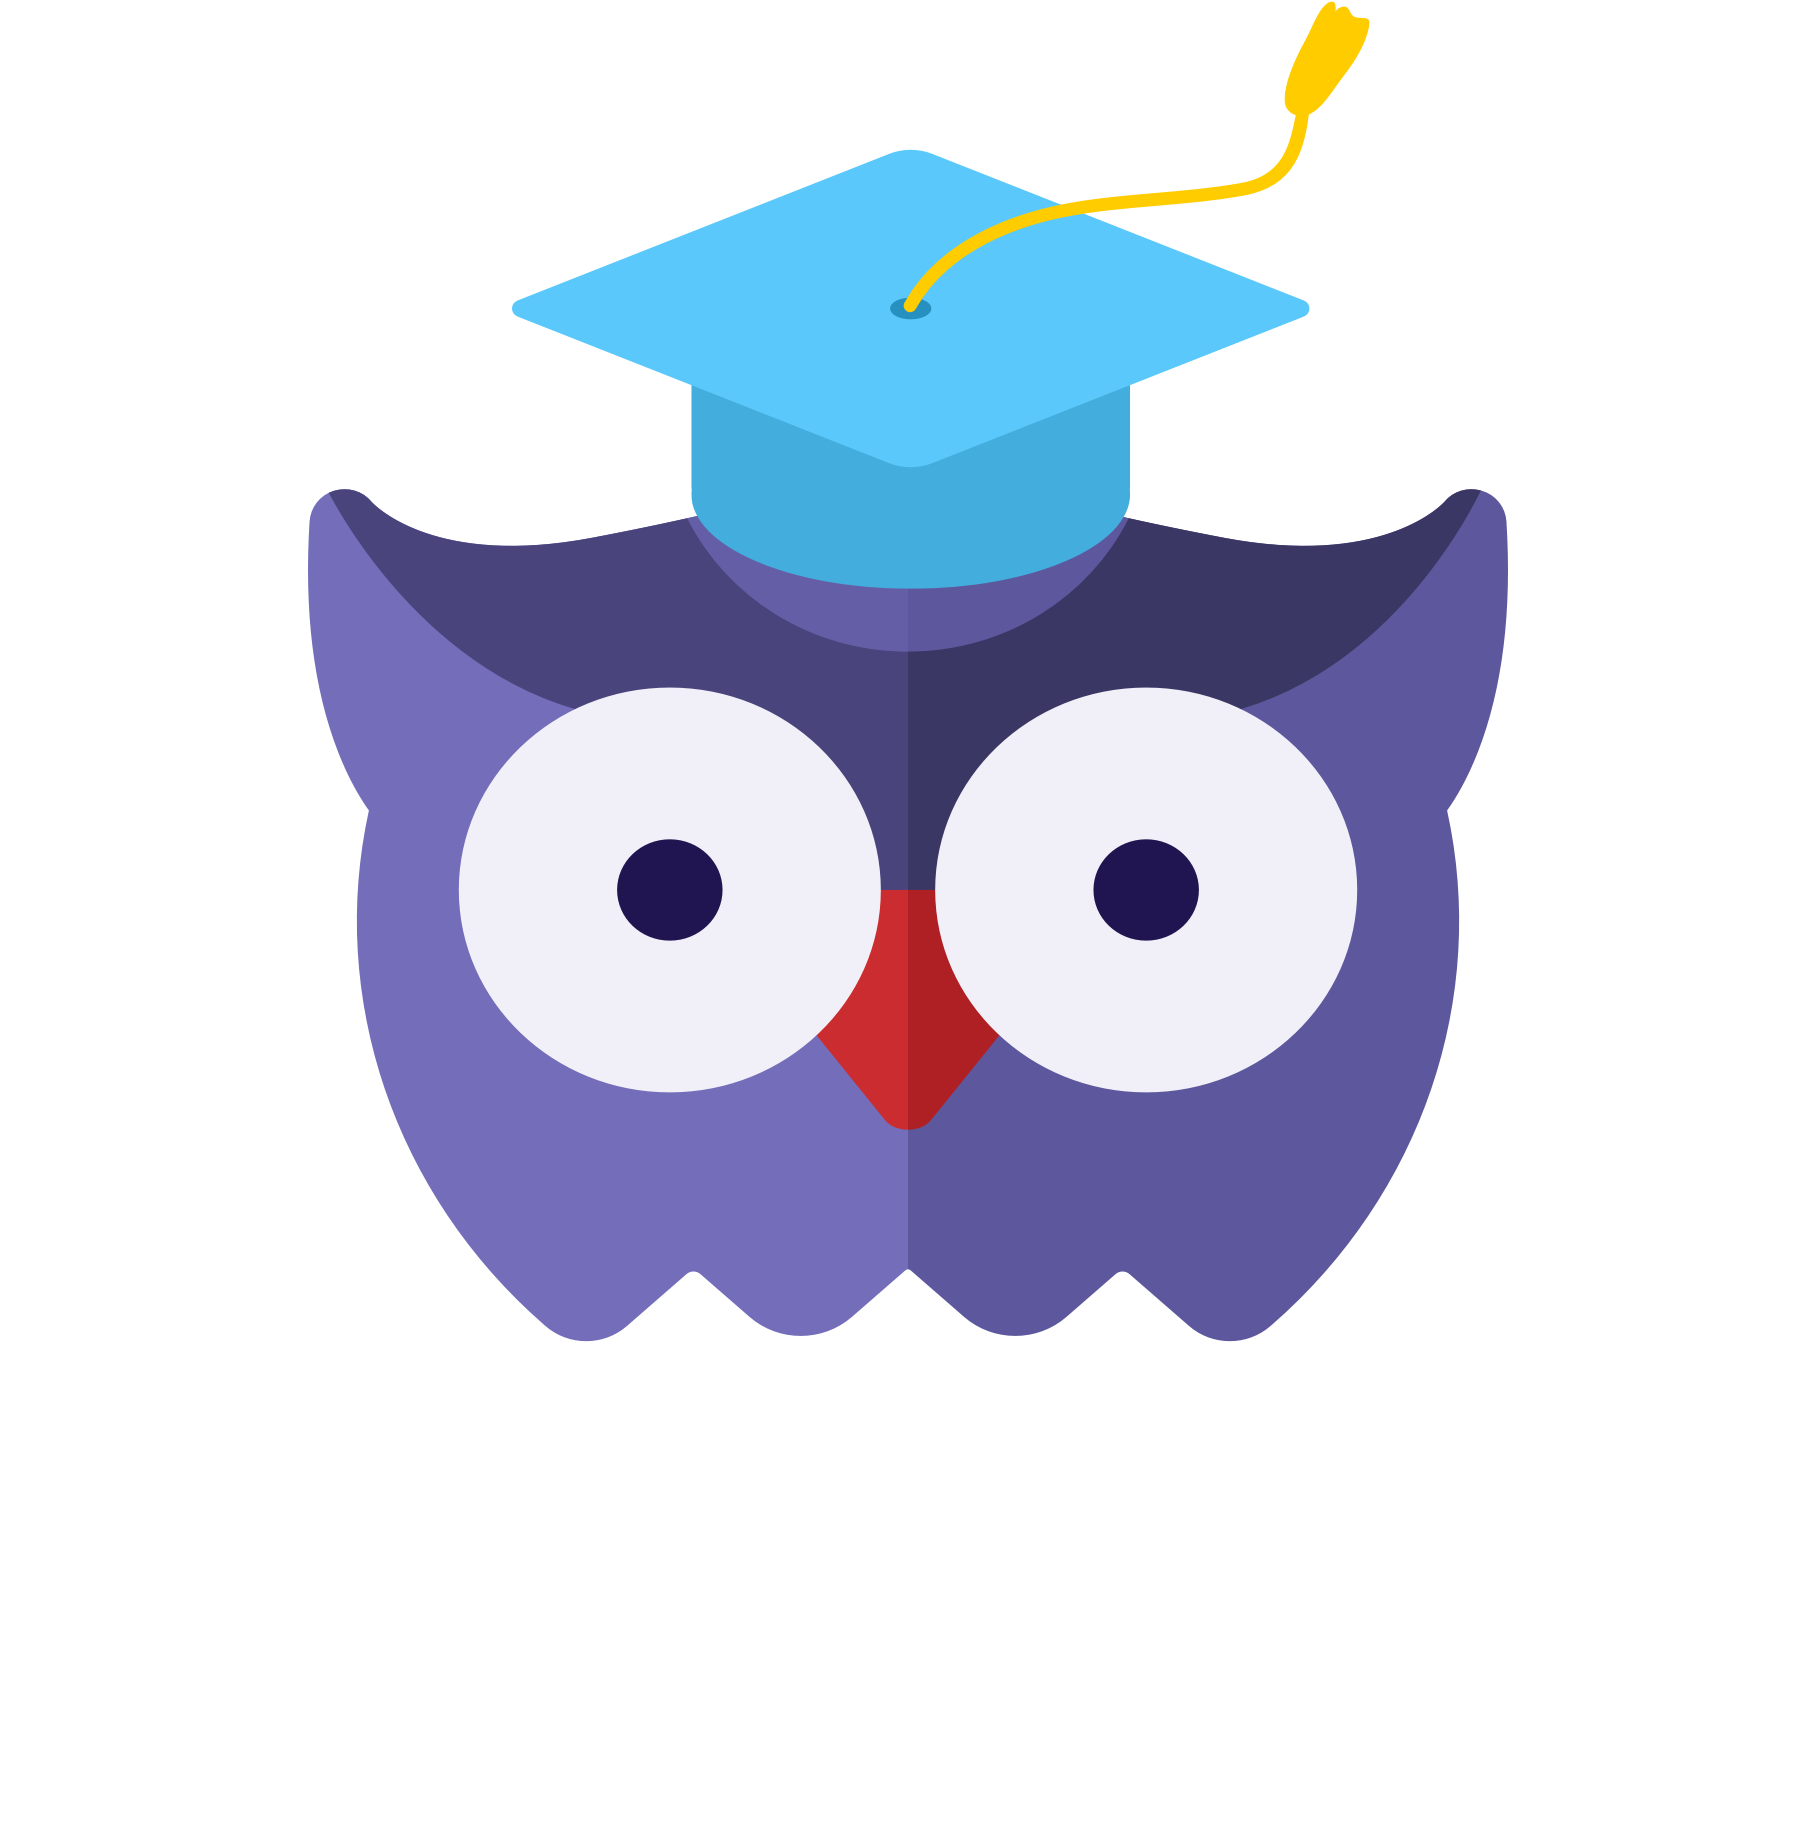 SightX mascot Siggy the owl with a graduation cap